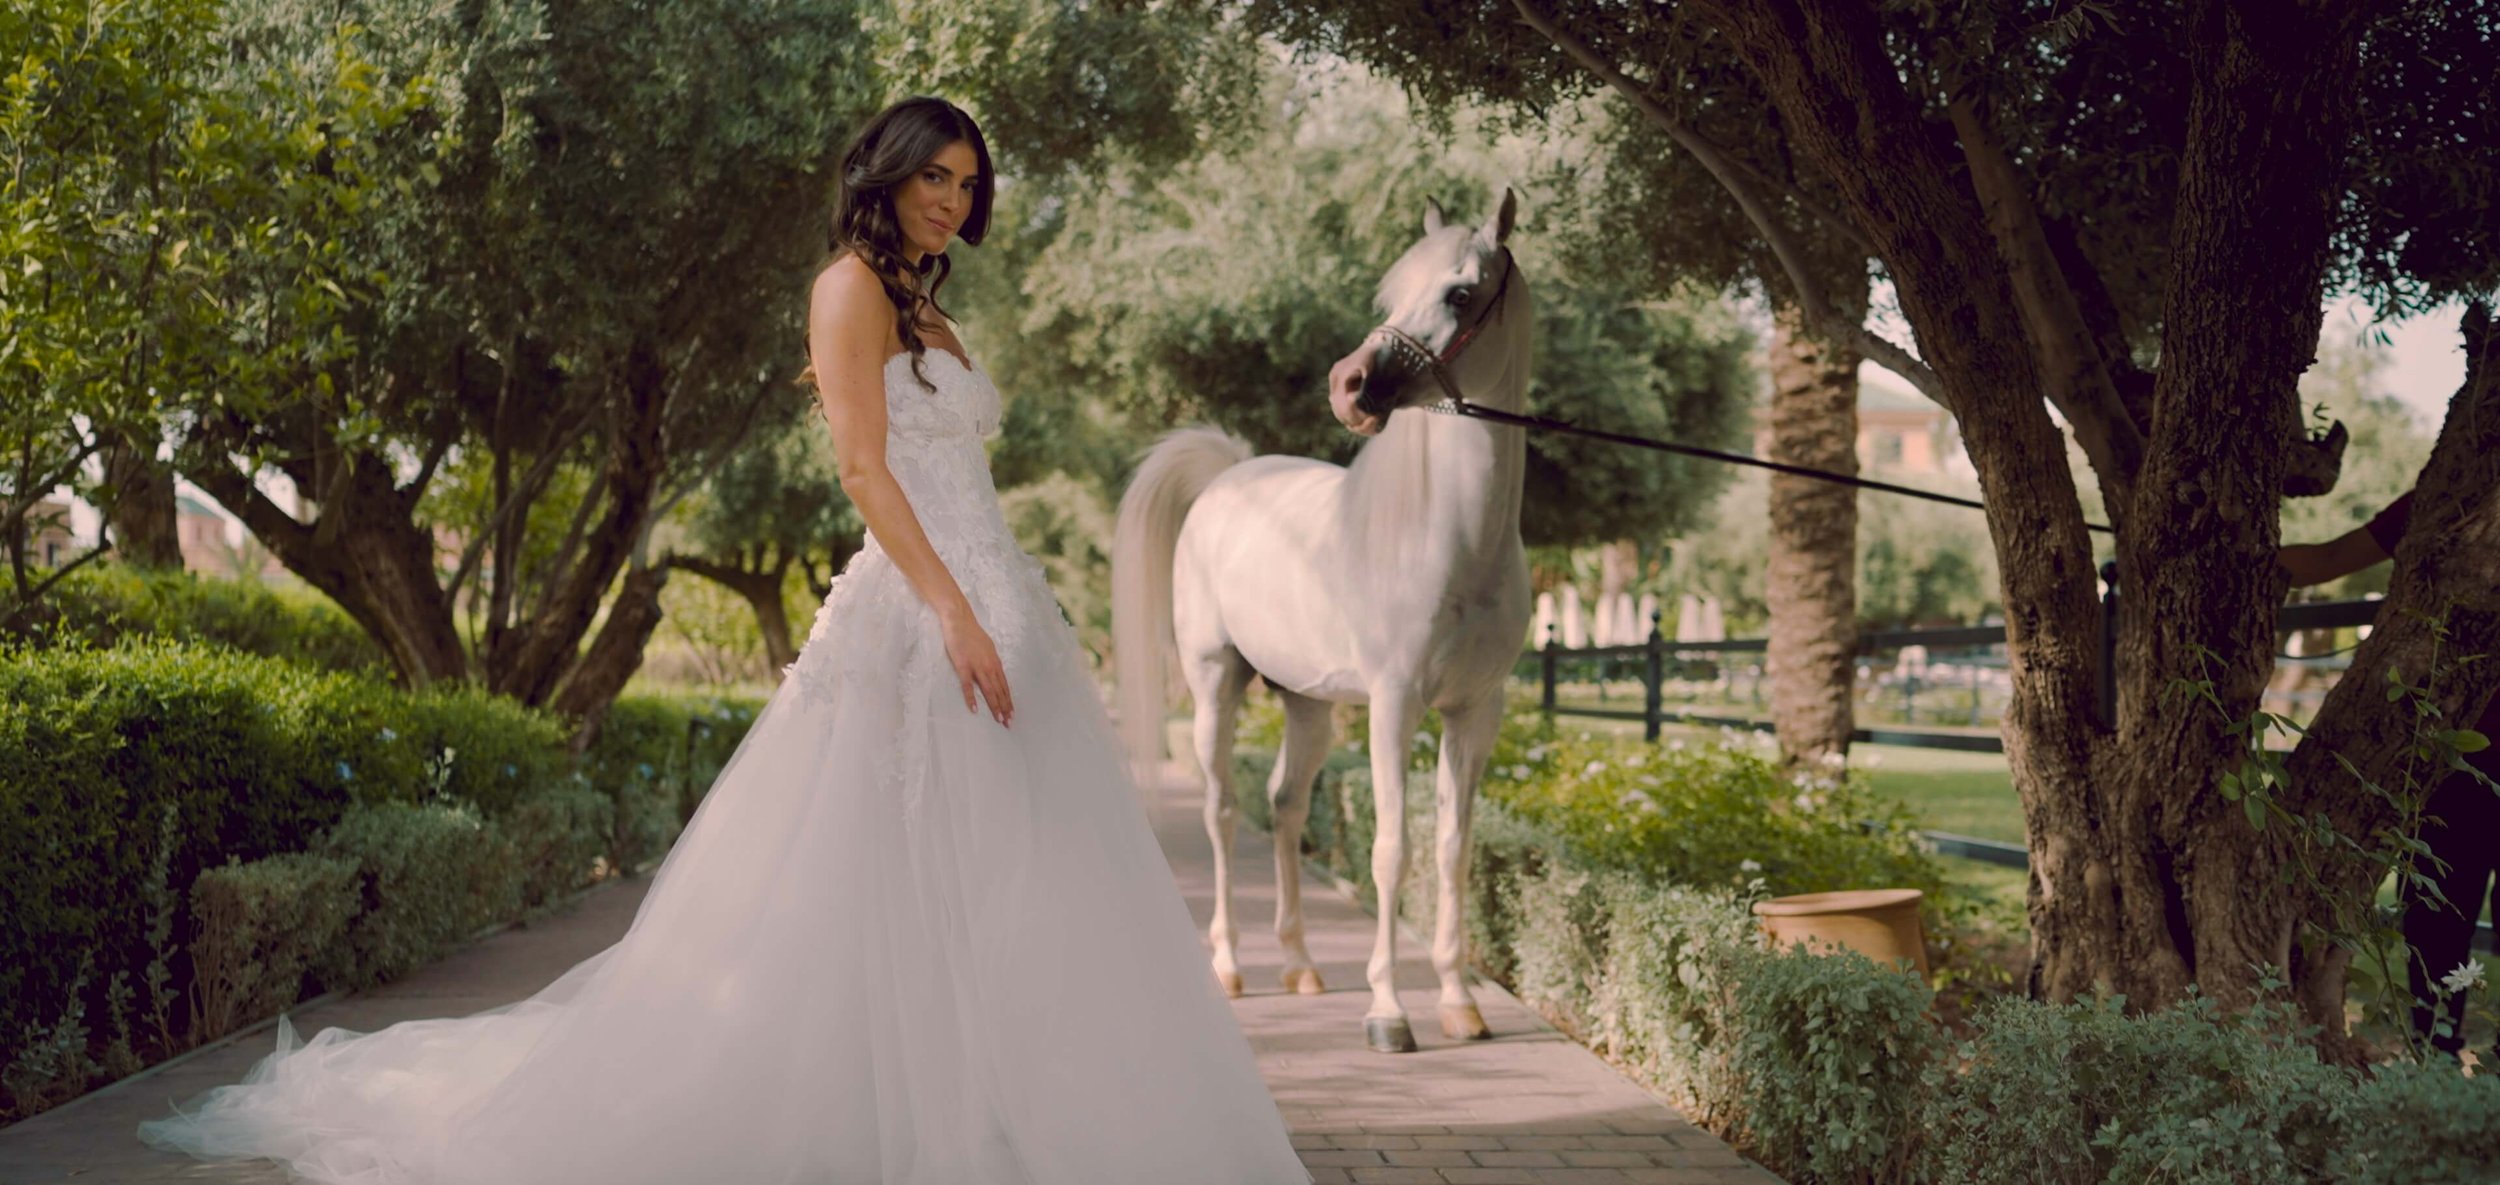 Alexandra & Raph - Wedding Film Highlight.mov_snapshot_01.00.373.jpg